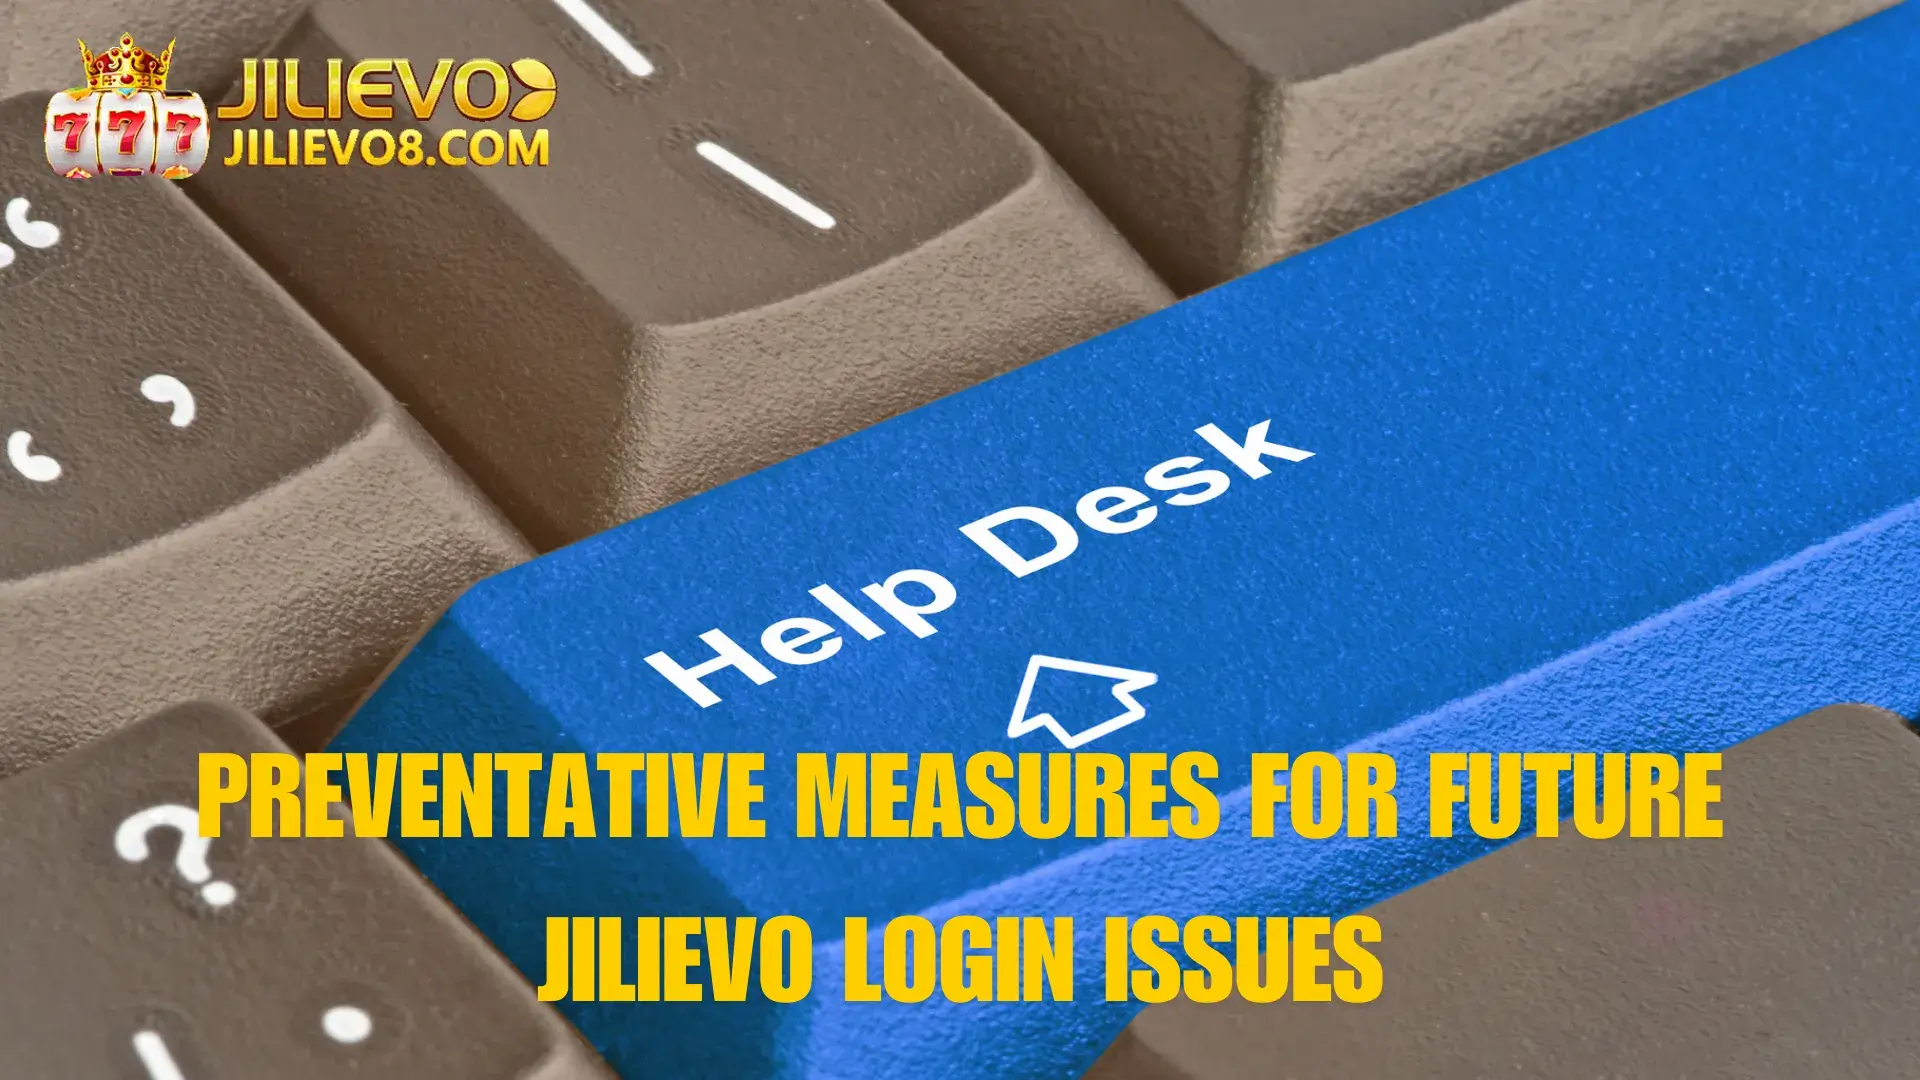 Preventative Measures for Future Jilievo Registration Problems